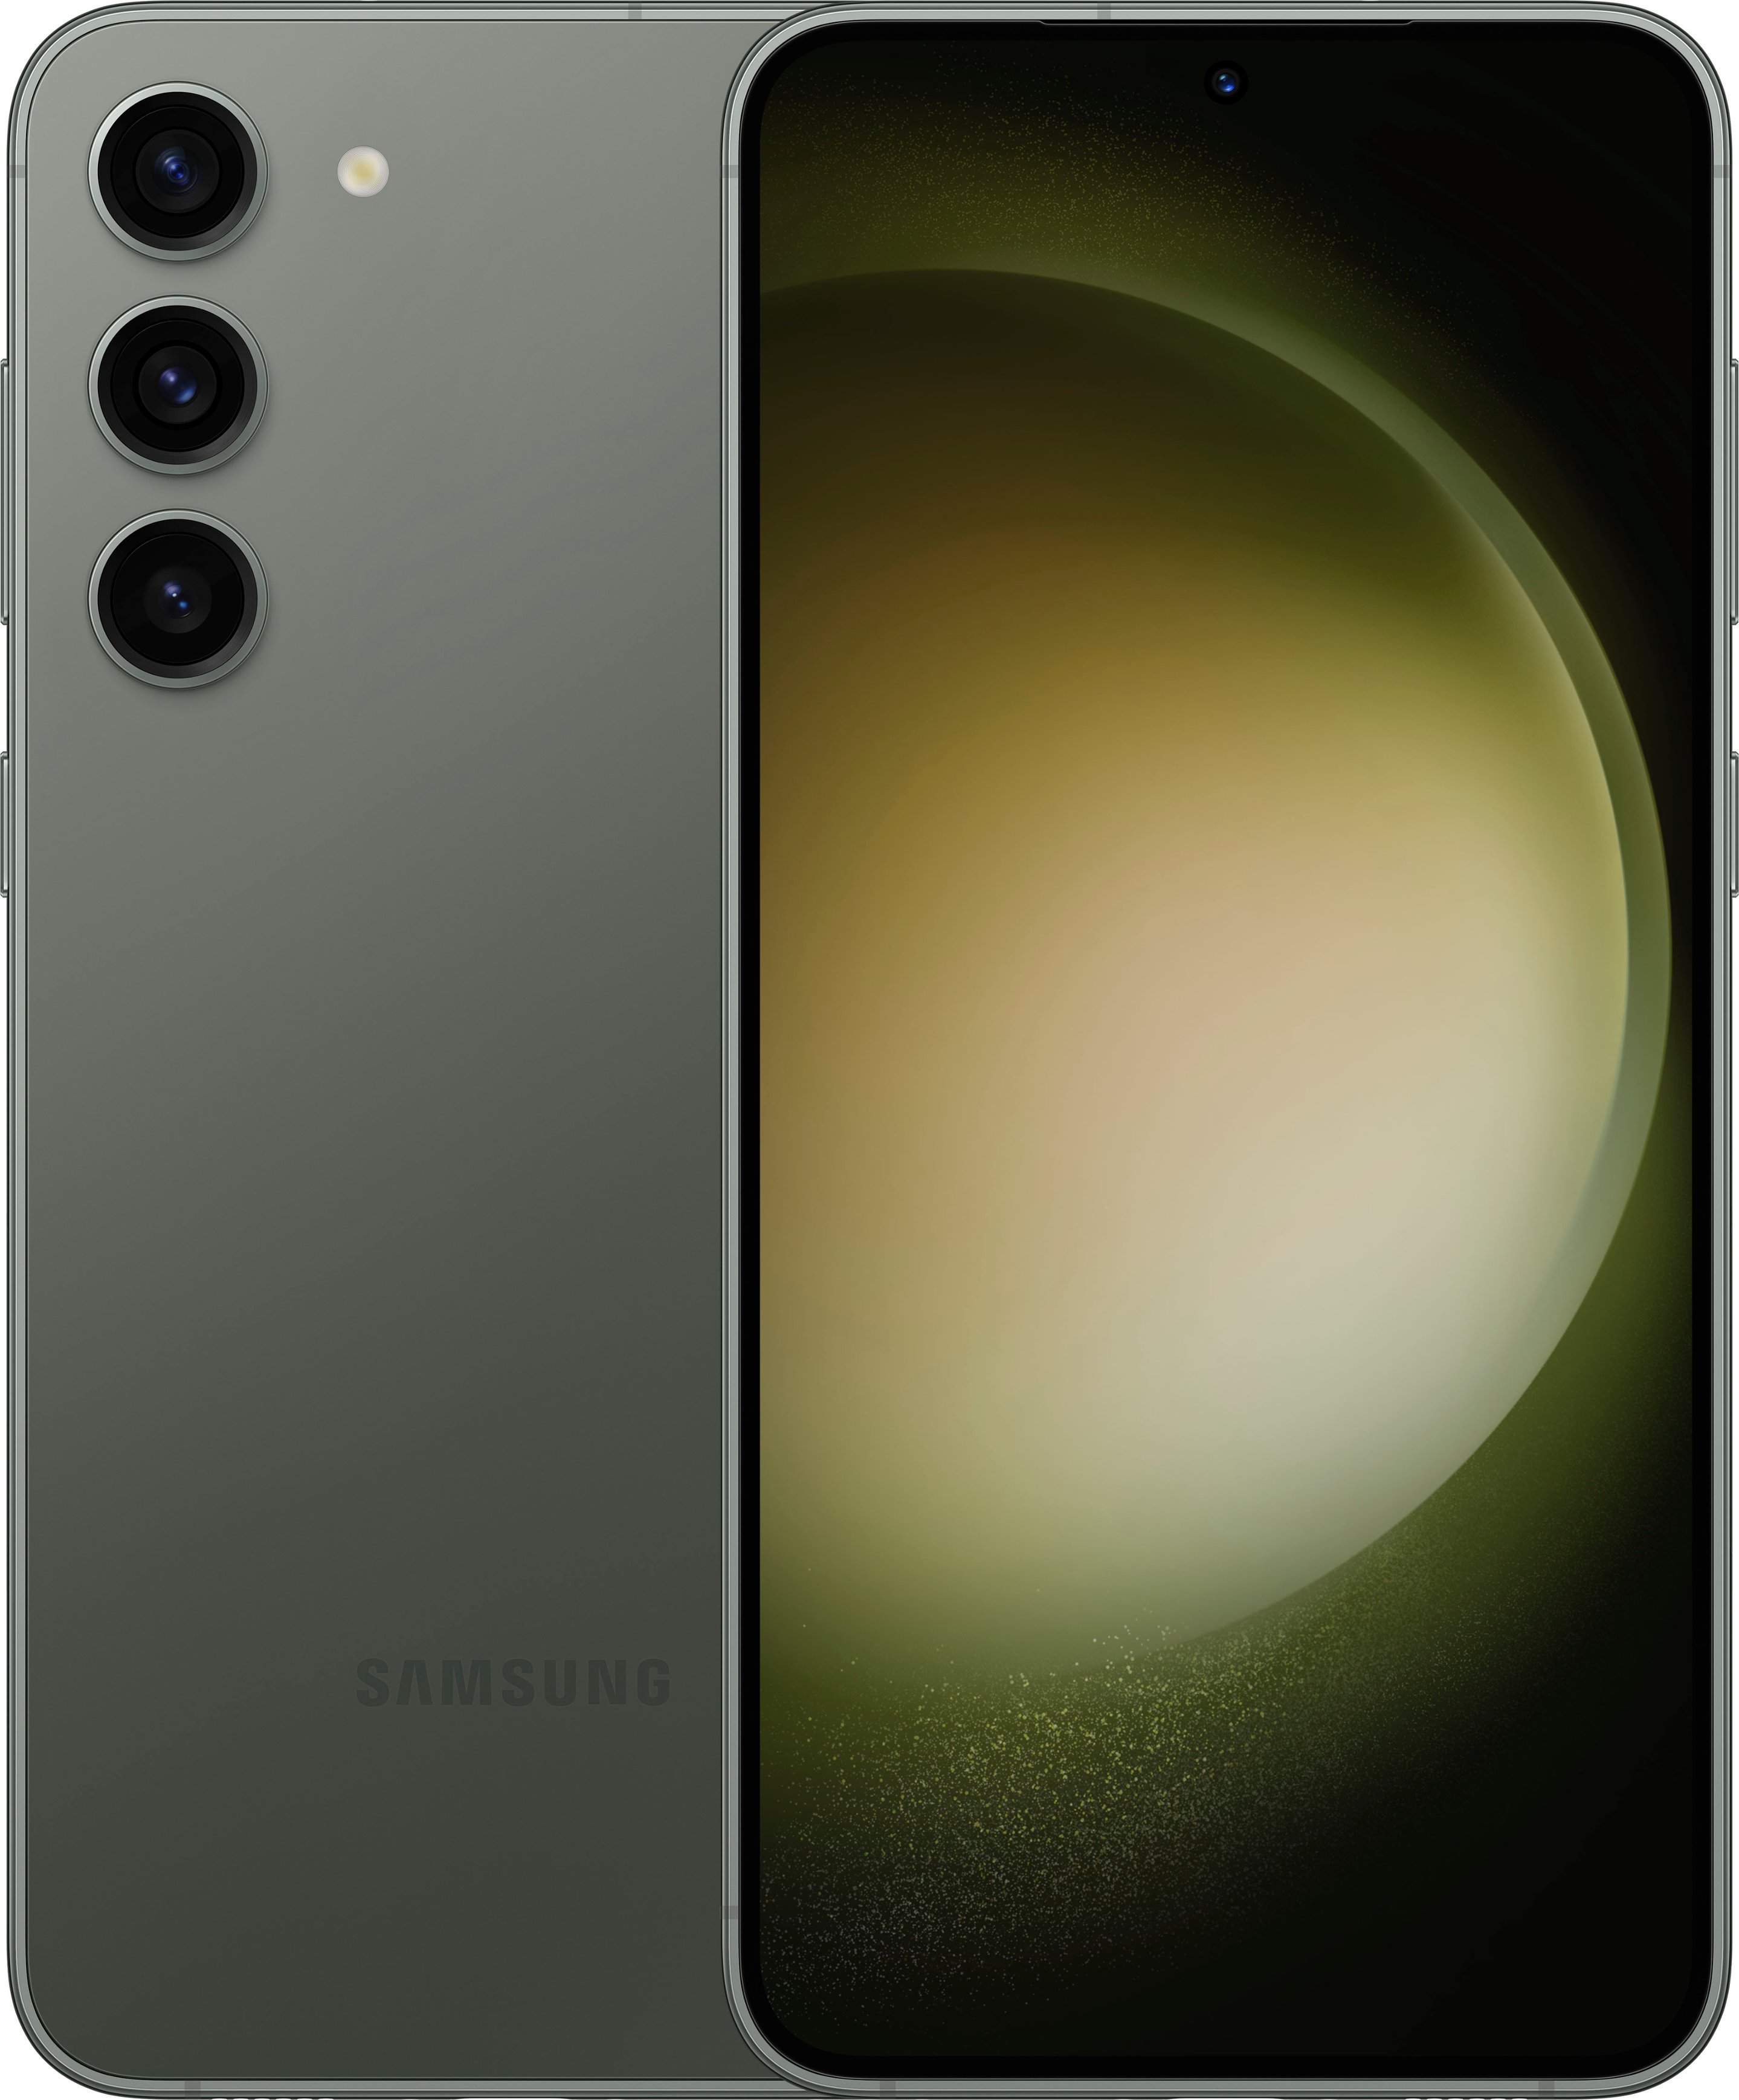 Buy Galaxy S23 FE 256GB (Unlocked) Phones